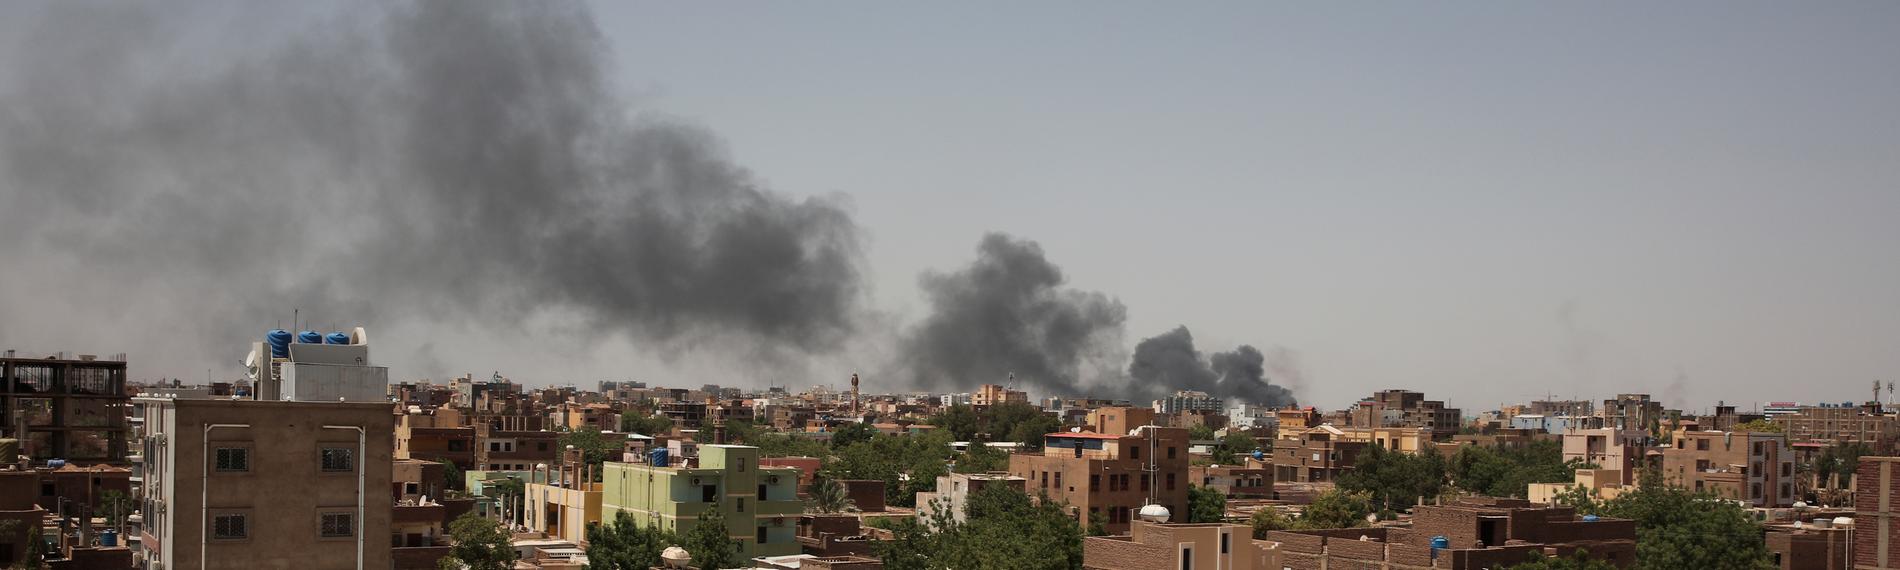 Smoke over the city of Khartoum in Sudan.